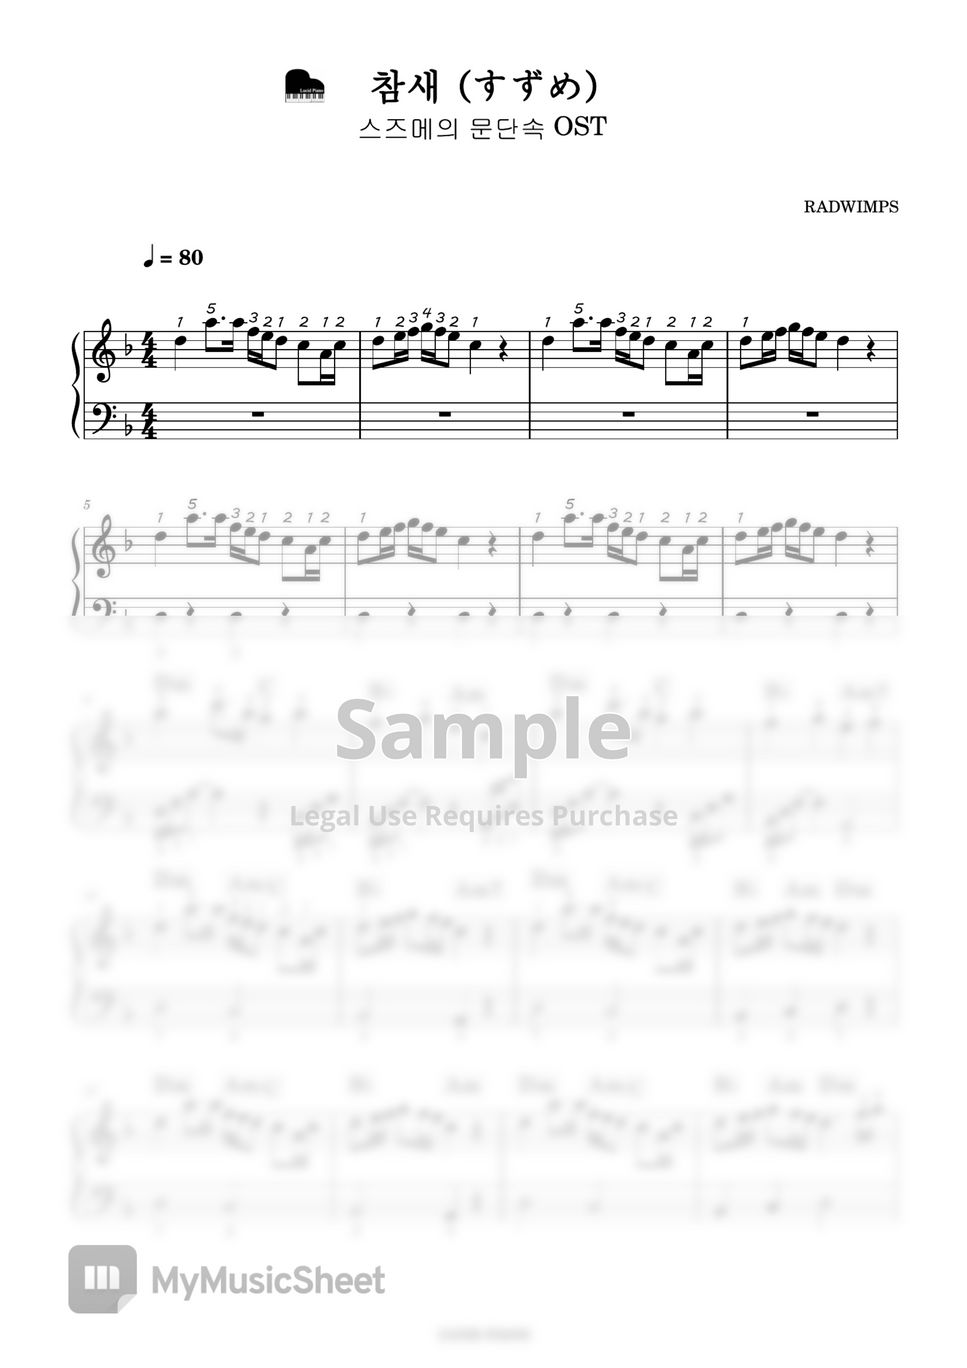 RADWIMPS - 스즈메의 문단속 OST - すずめ (Suzume, 참새) (쉬운 악보) by Lucid Piano